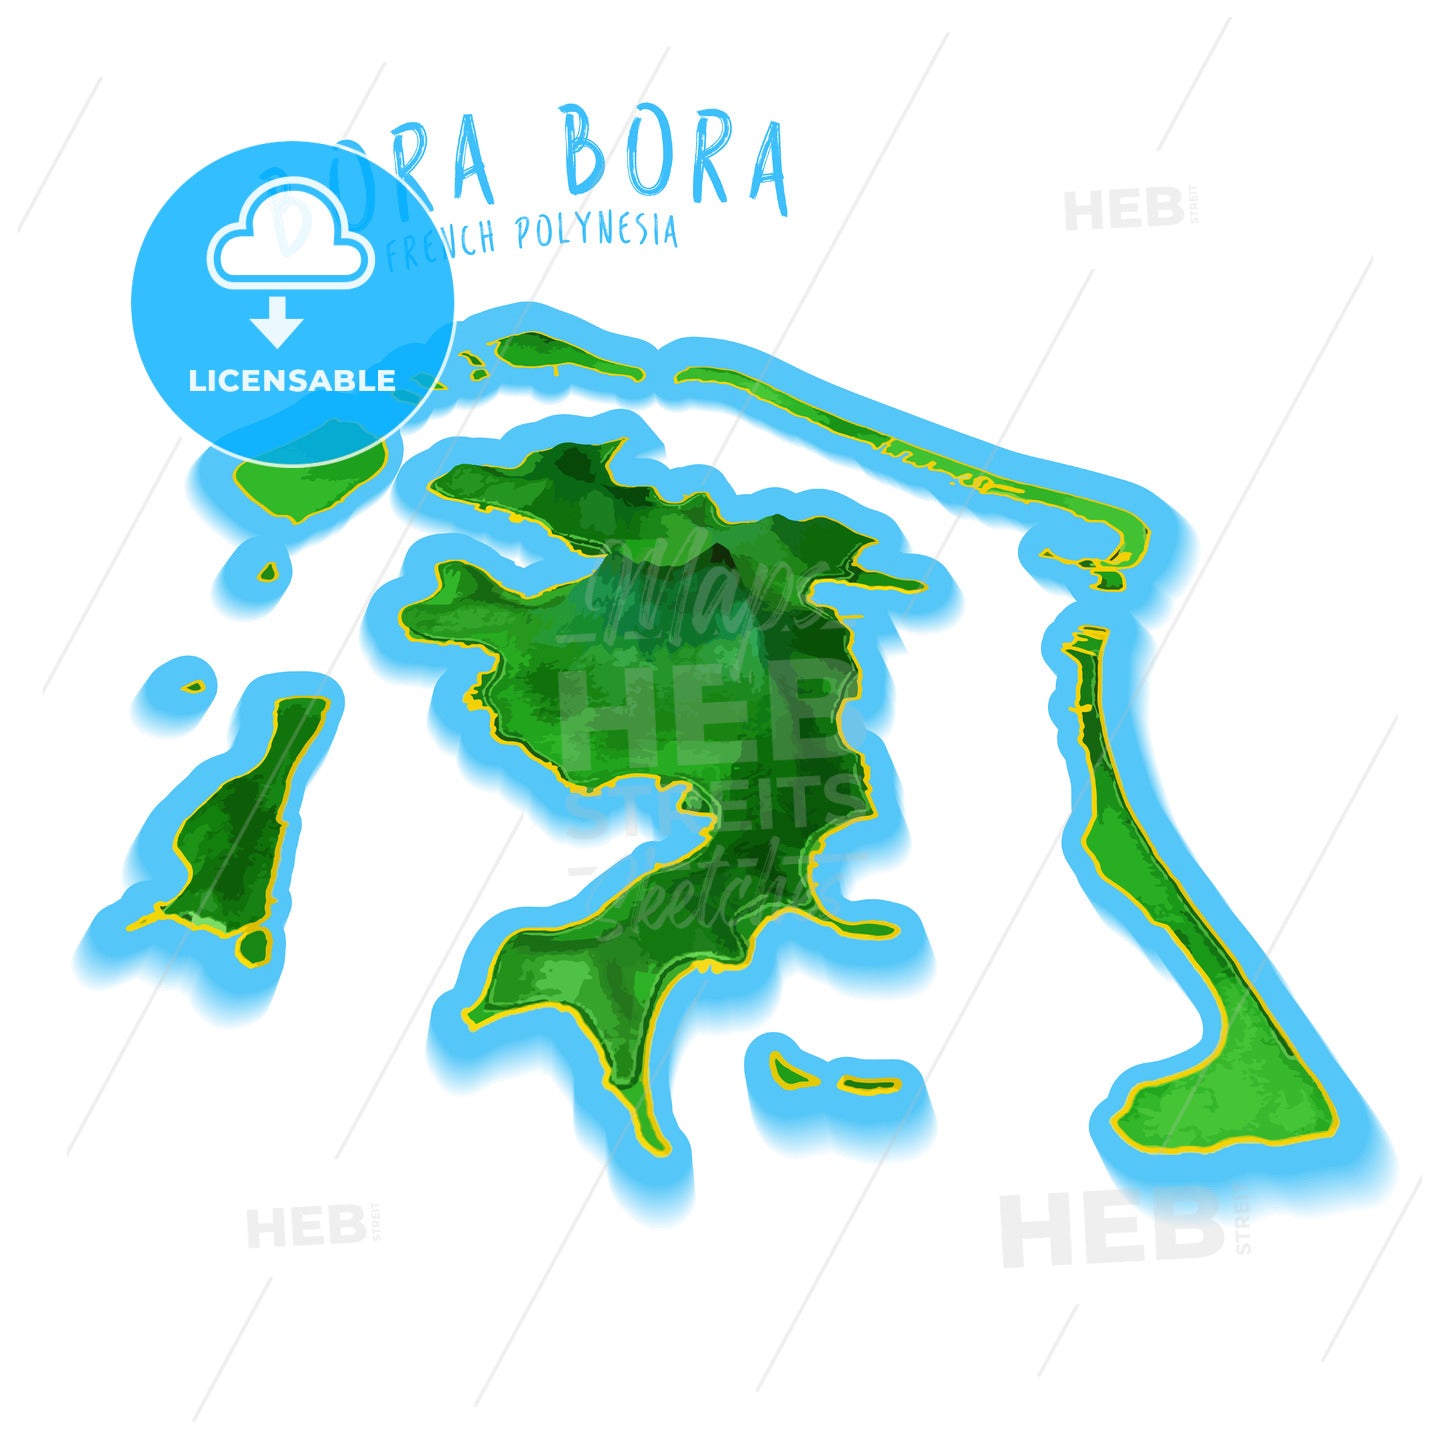 Bora Bora Map with nice background